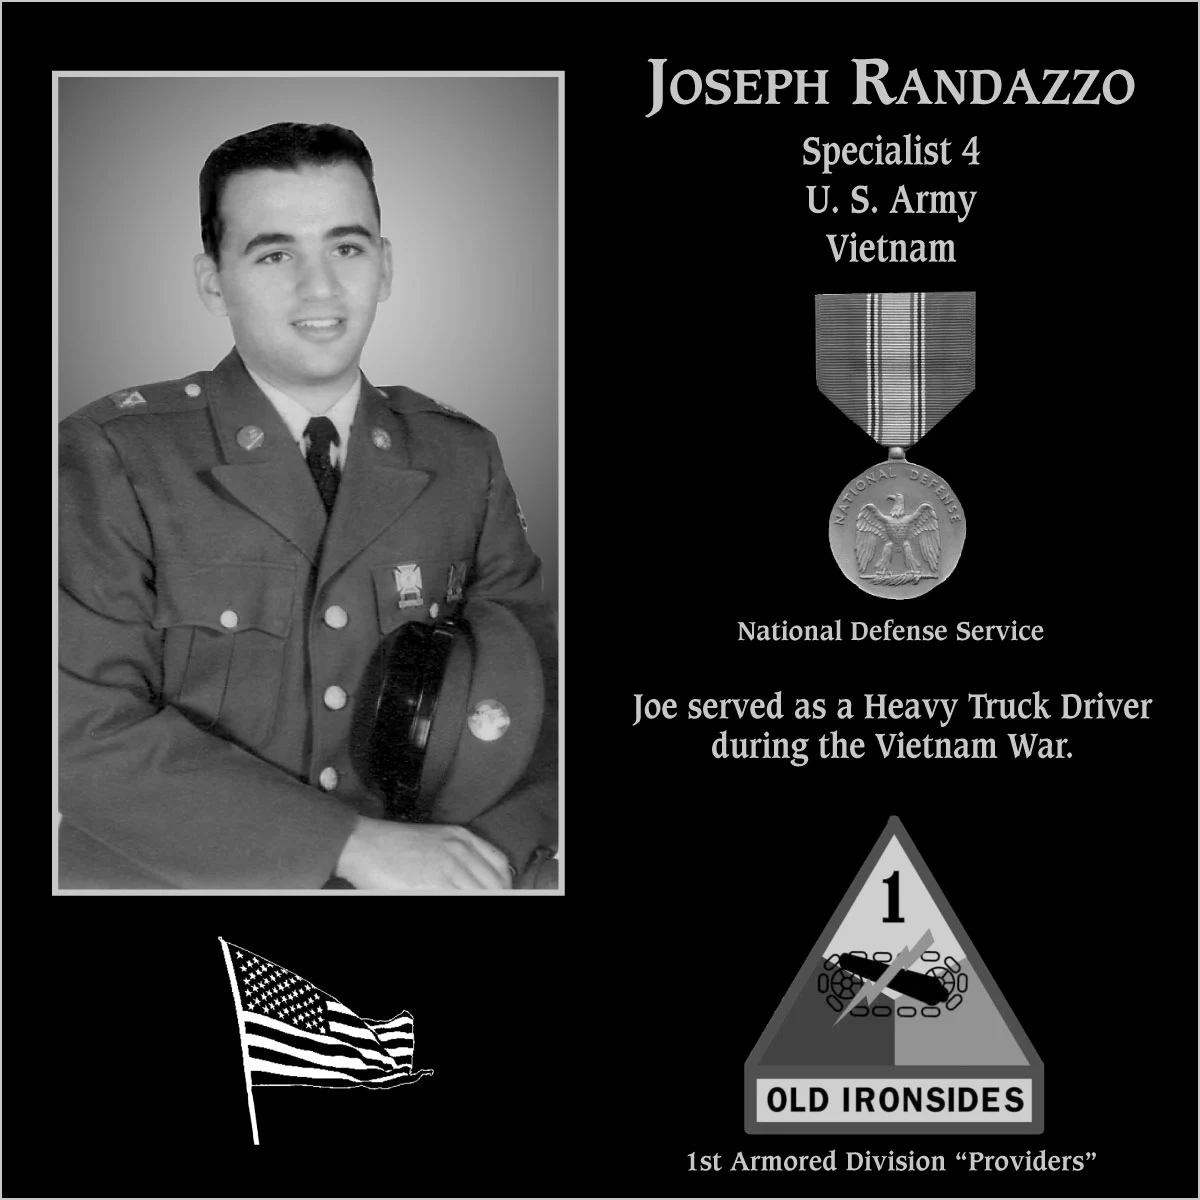 Joseph Randazzo